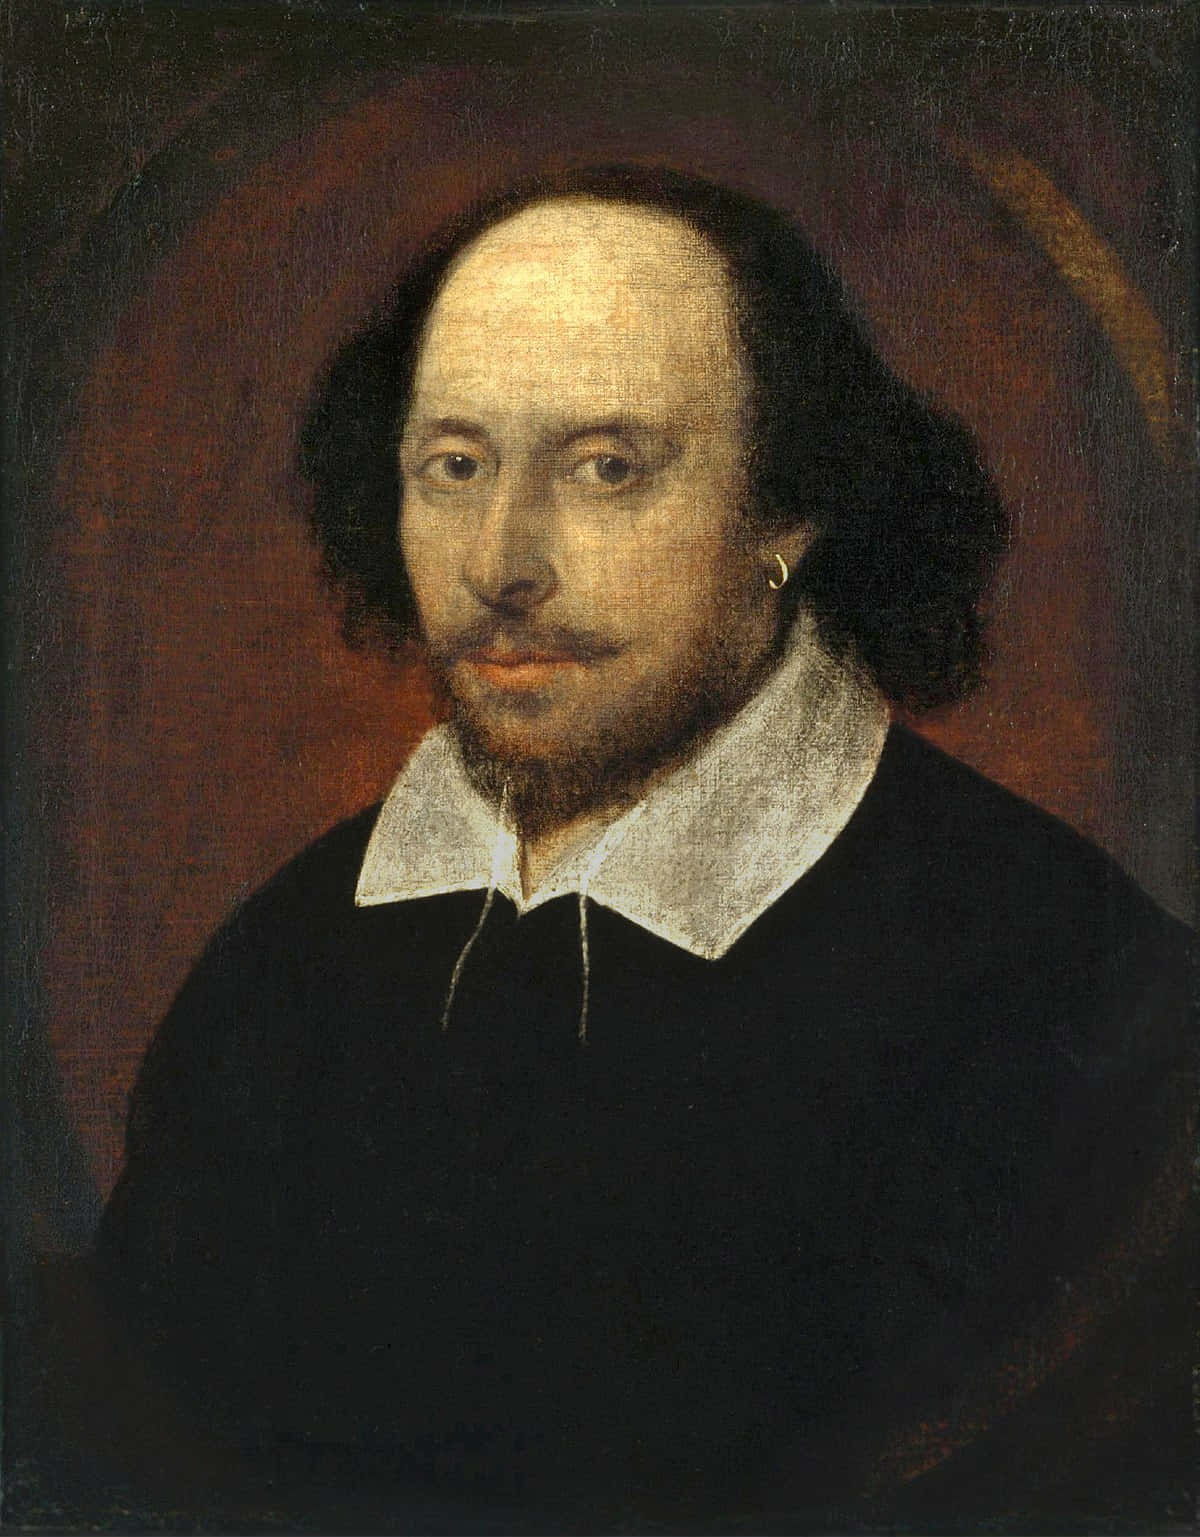 Porträtbildwilliam Shakespeare